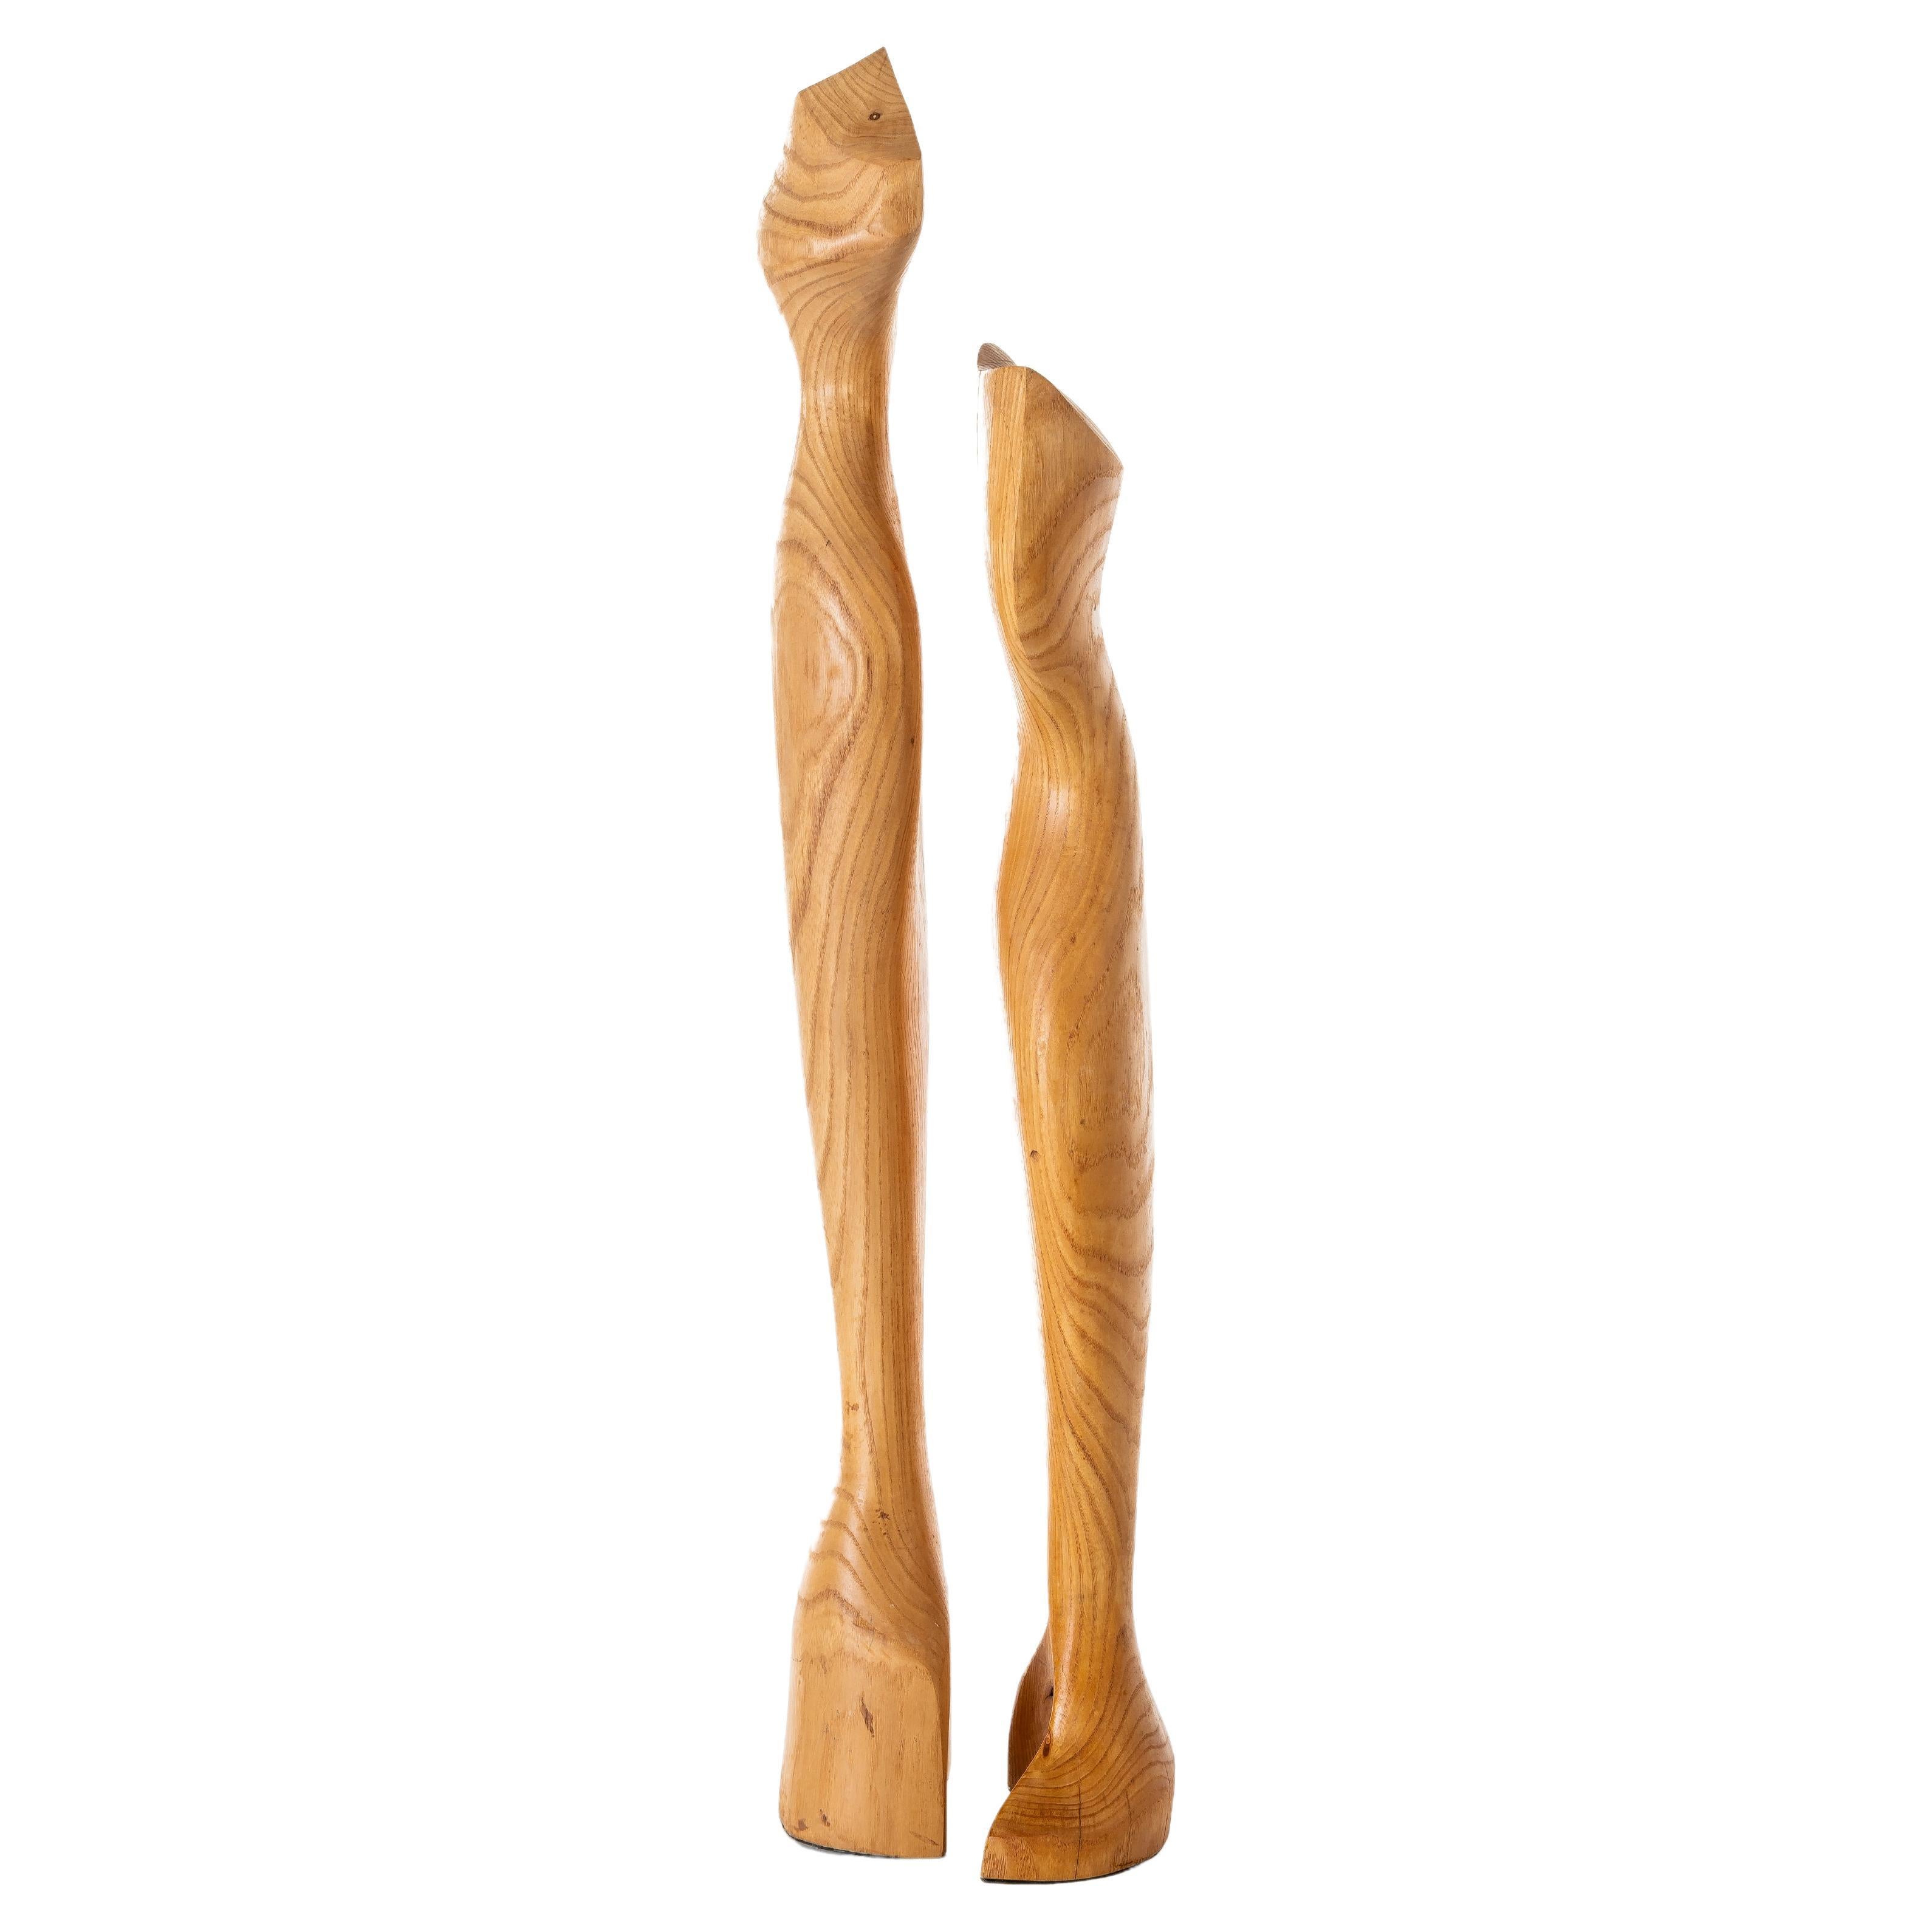 Pair of Wood Sculptures